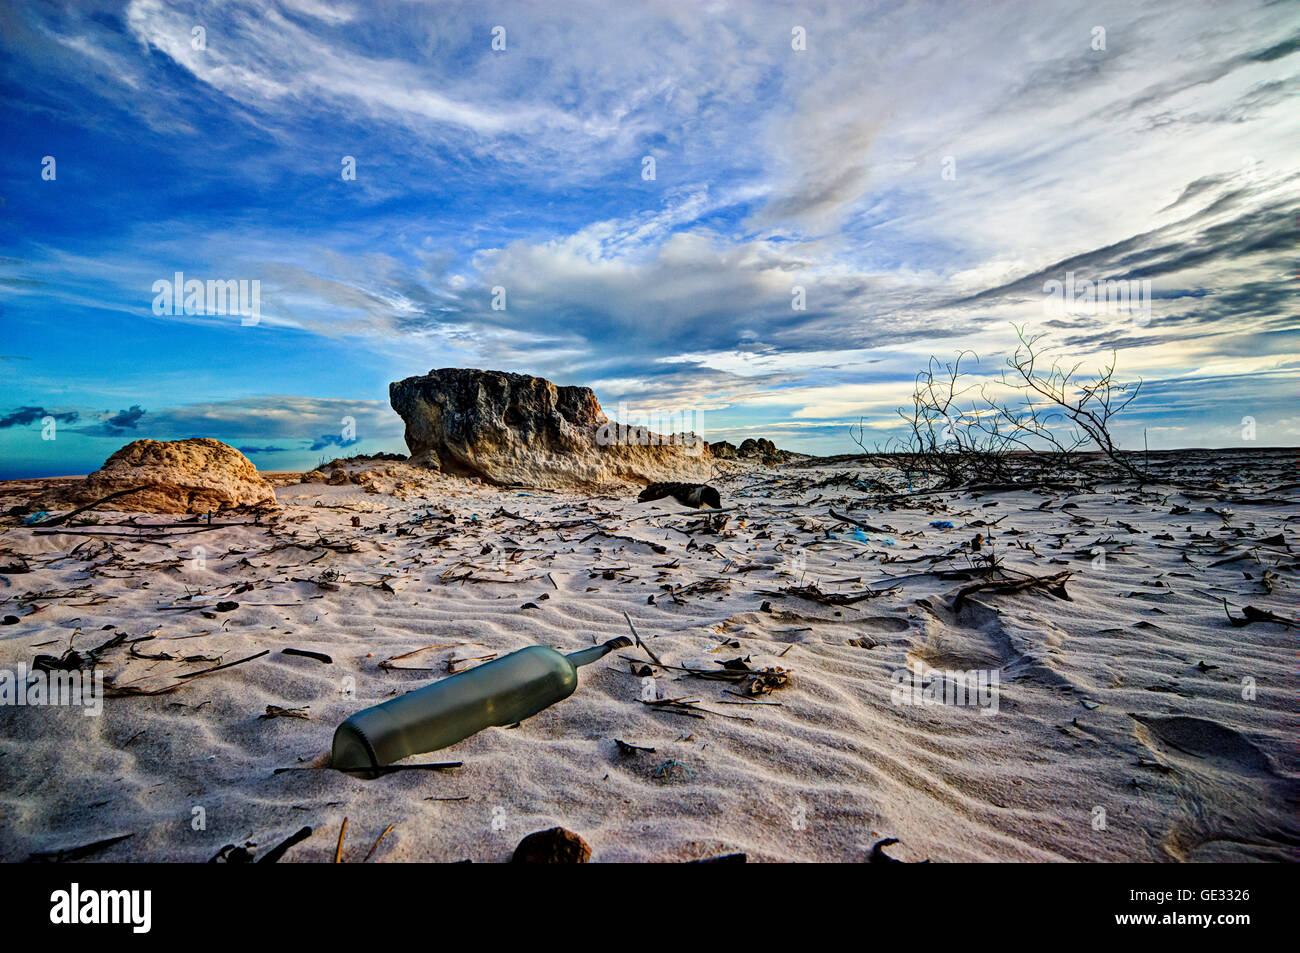 Desert scenery in National Park of Lencois Maranhenses, Brazil. Empty bottle in the foreground and wind sculptered sand rocks Stock Photo